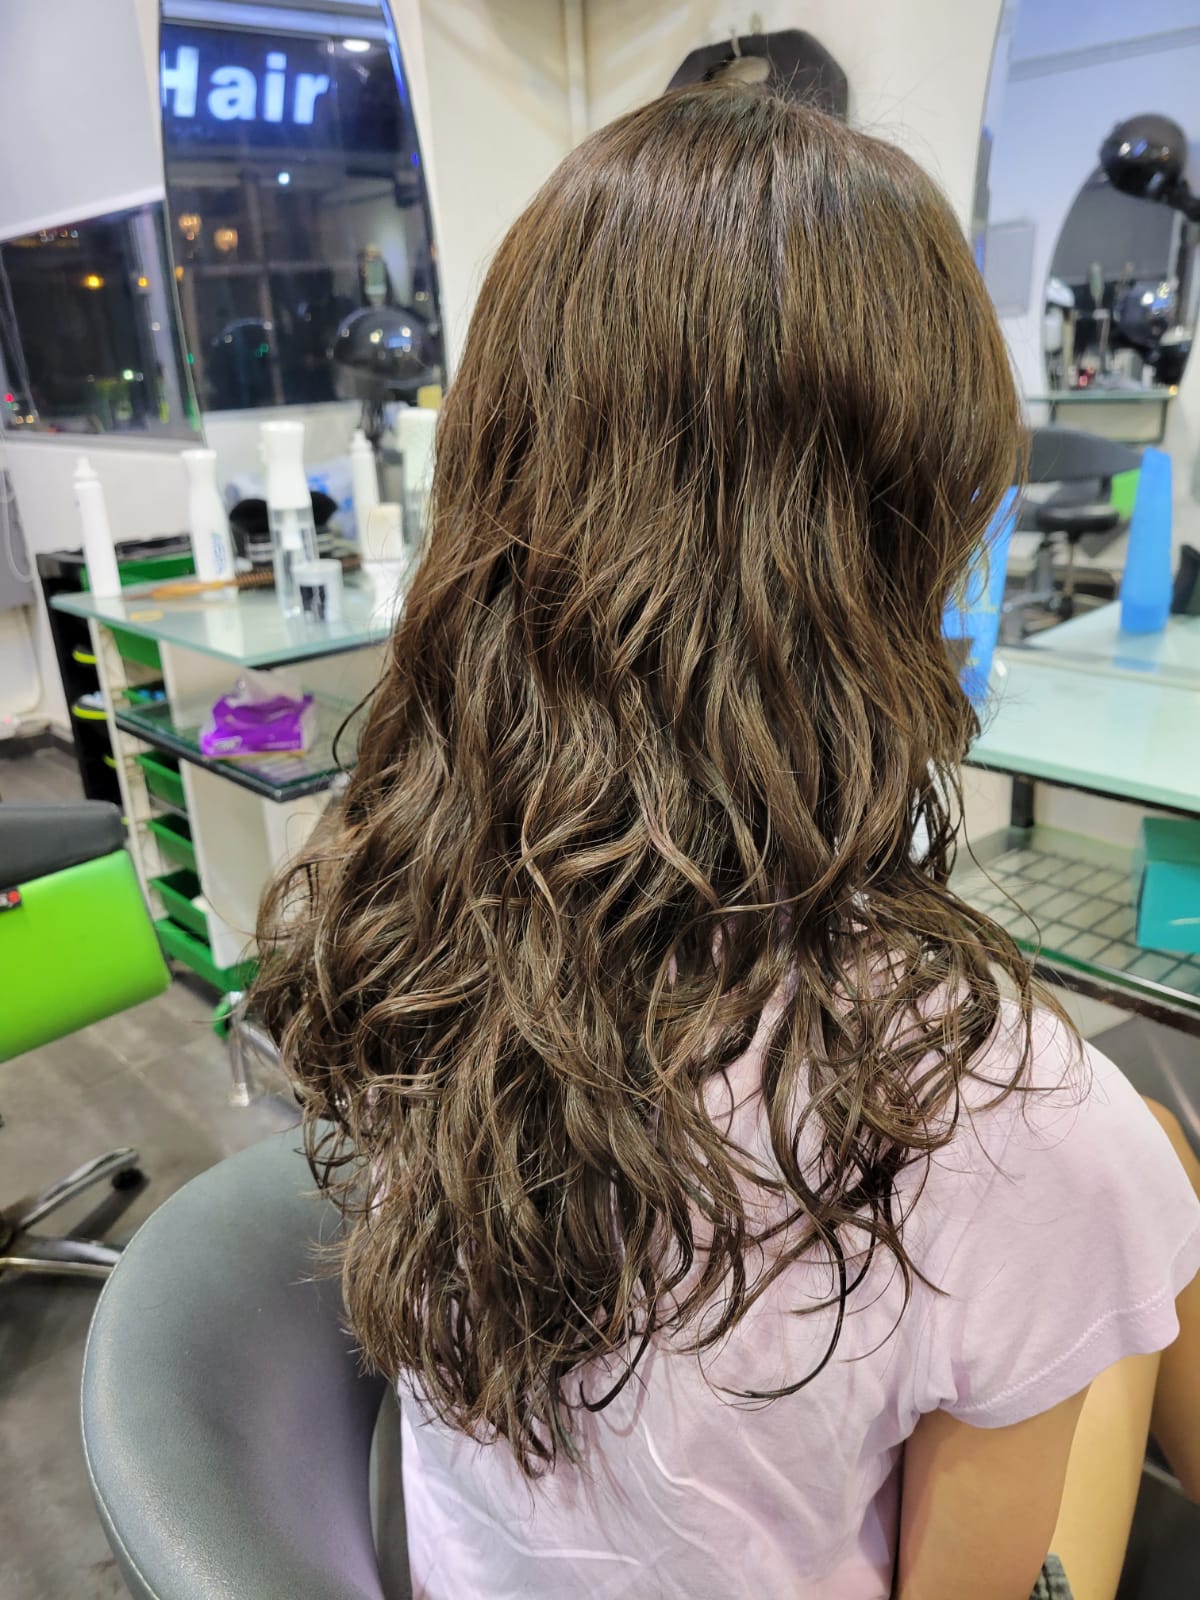  I do Hair ®之髮型作品: ✨ 日本溶濟PAIMORE 直髮療程✨